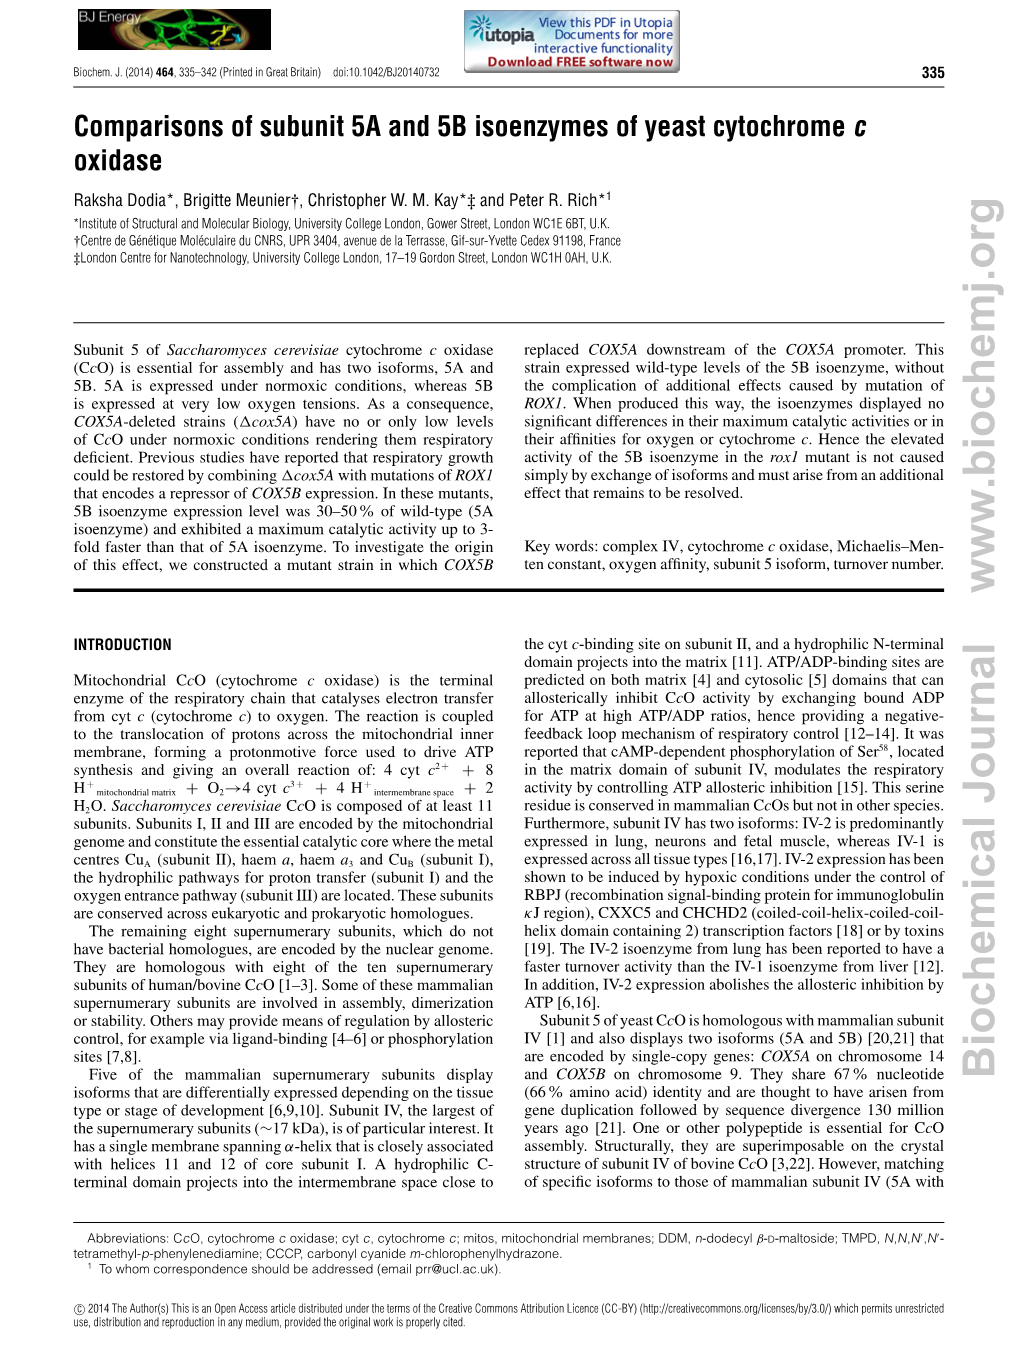 Comparisons of Subunit 5A and 5B Isoenzymes of Yeast Cytochrome C Oxidase Raksha Dodia*, Brigitte Meunier†, Christopher W